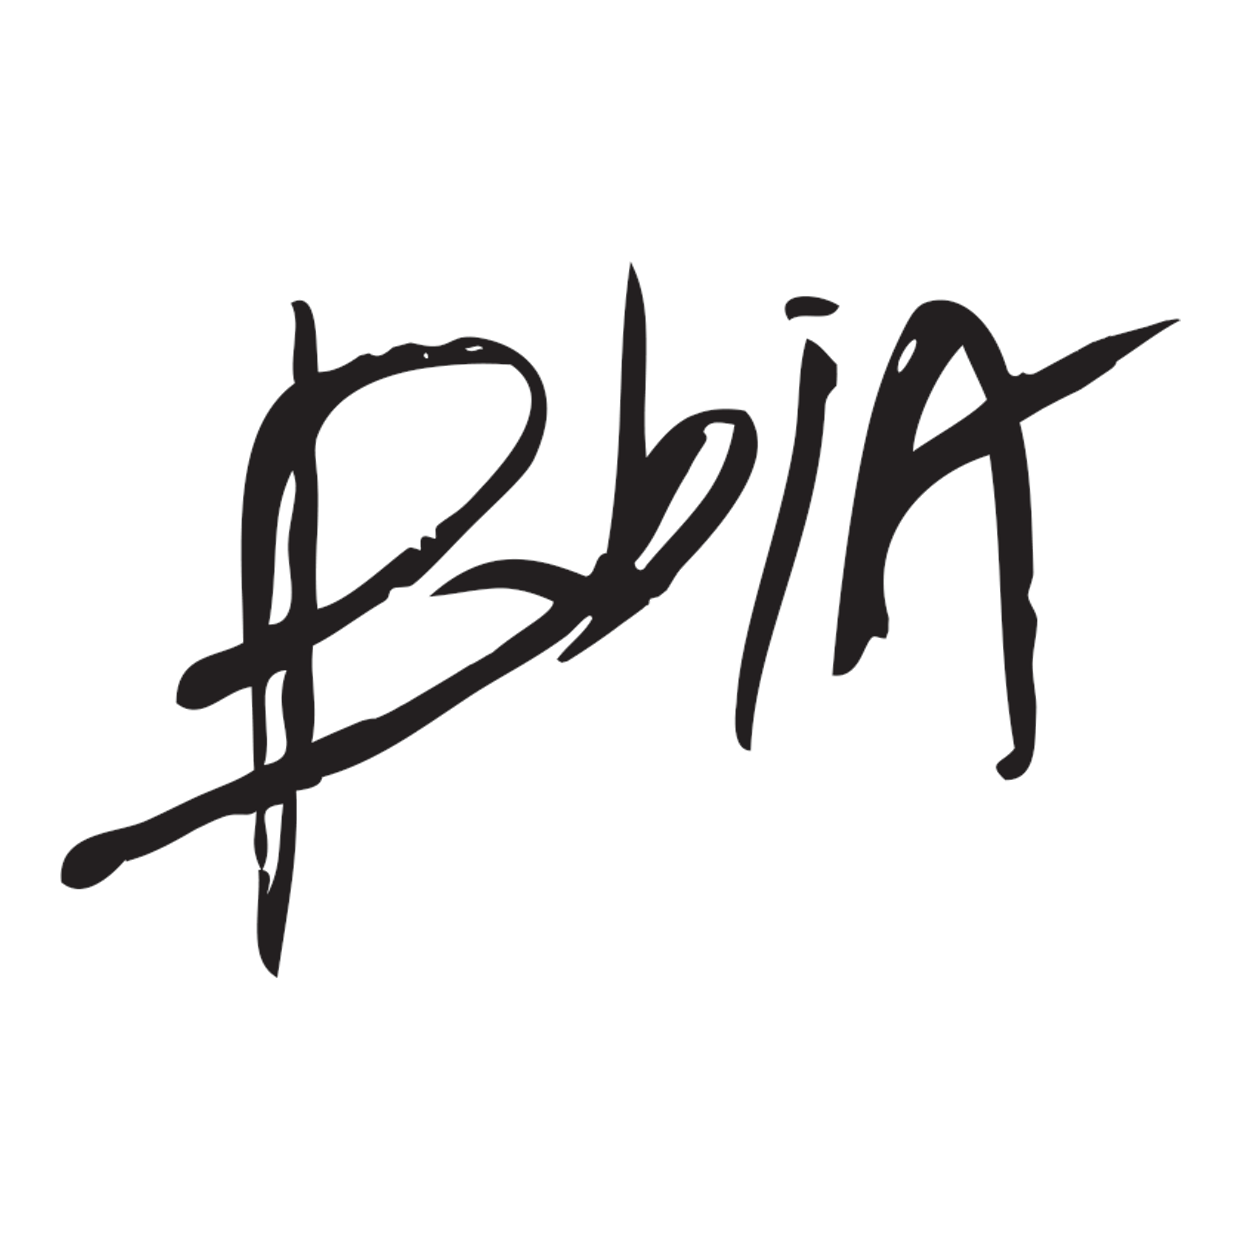 BBIA logo